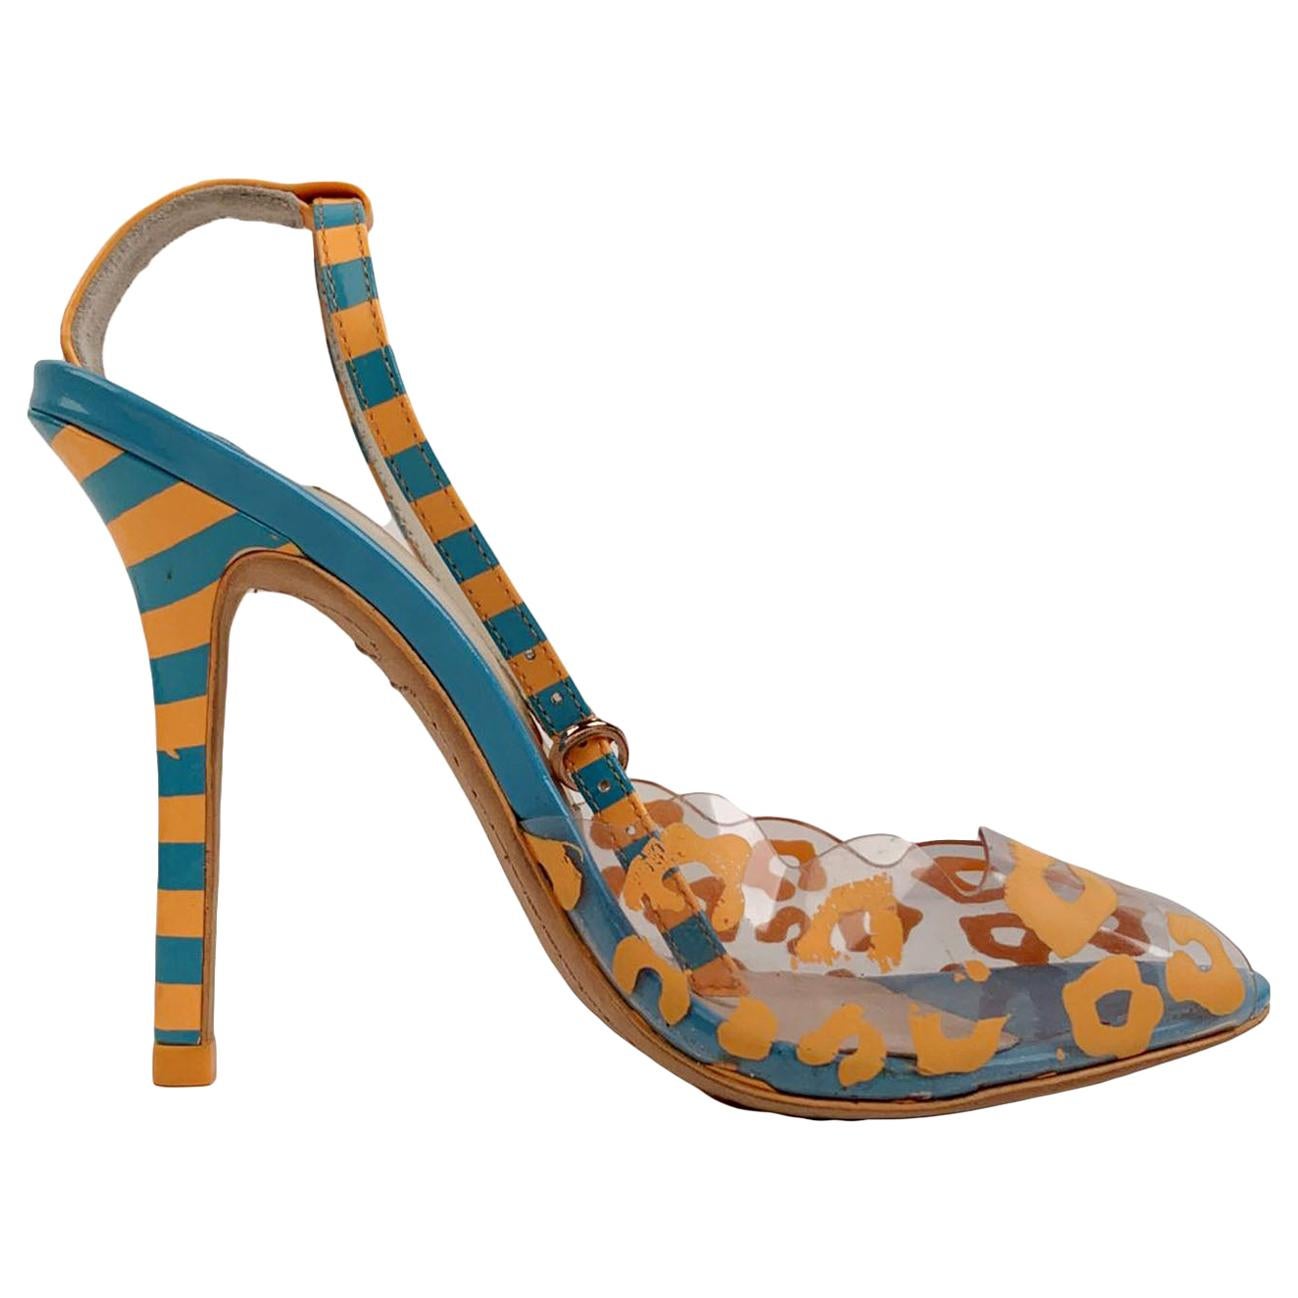 Sophia Webster Plastic Blue and Orange Striped Sandals Shoes Size 35.5